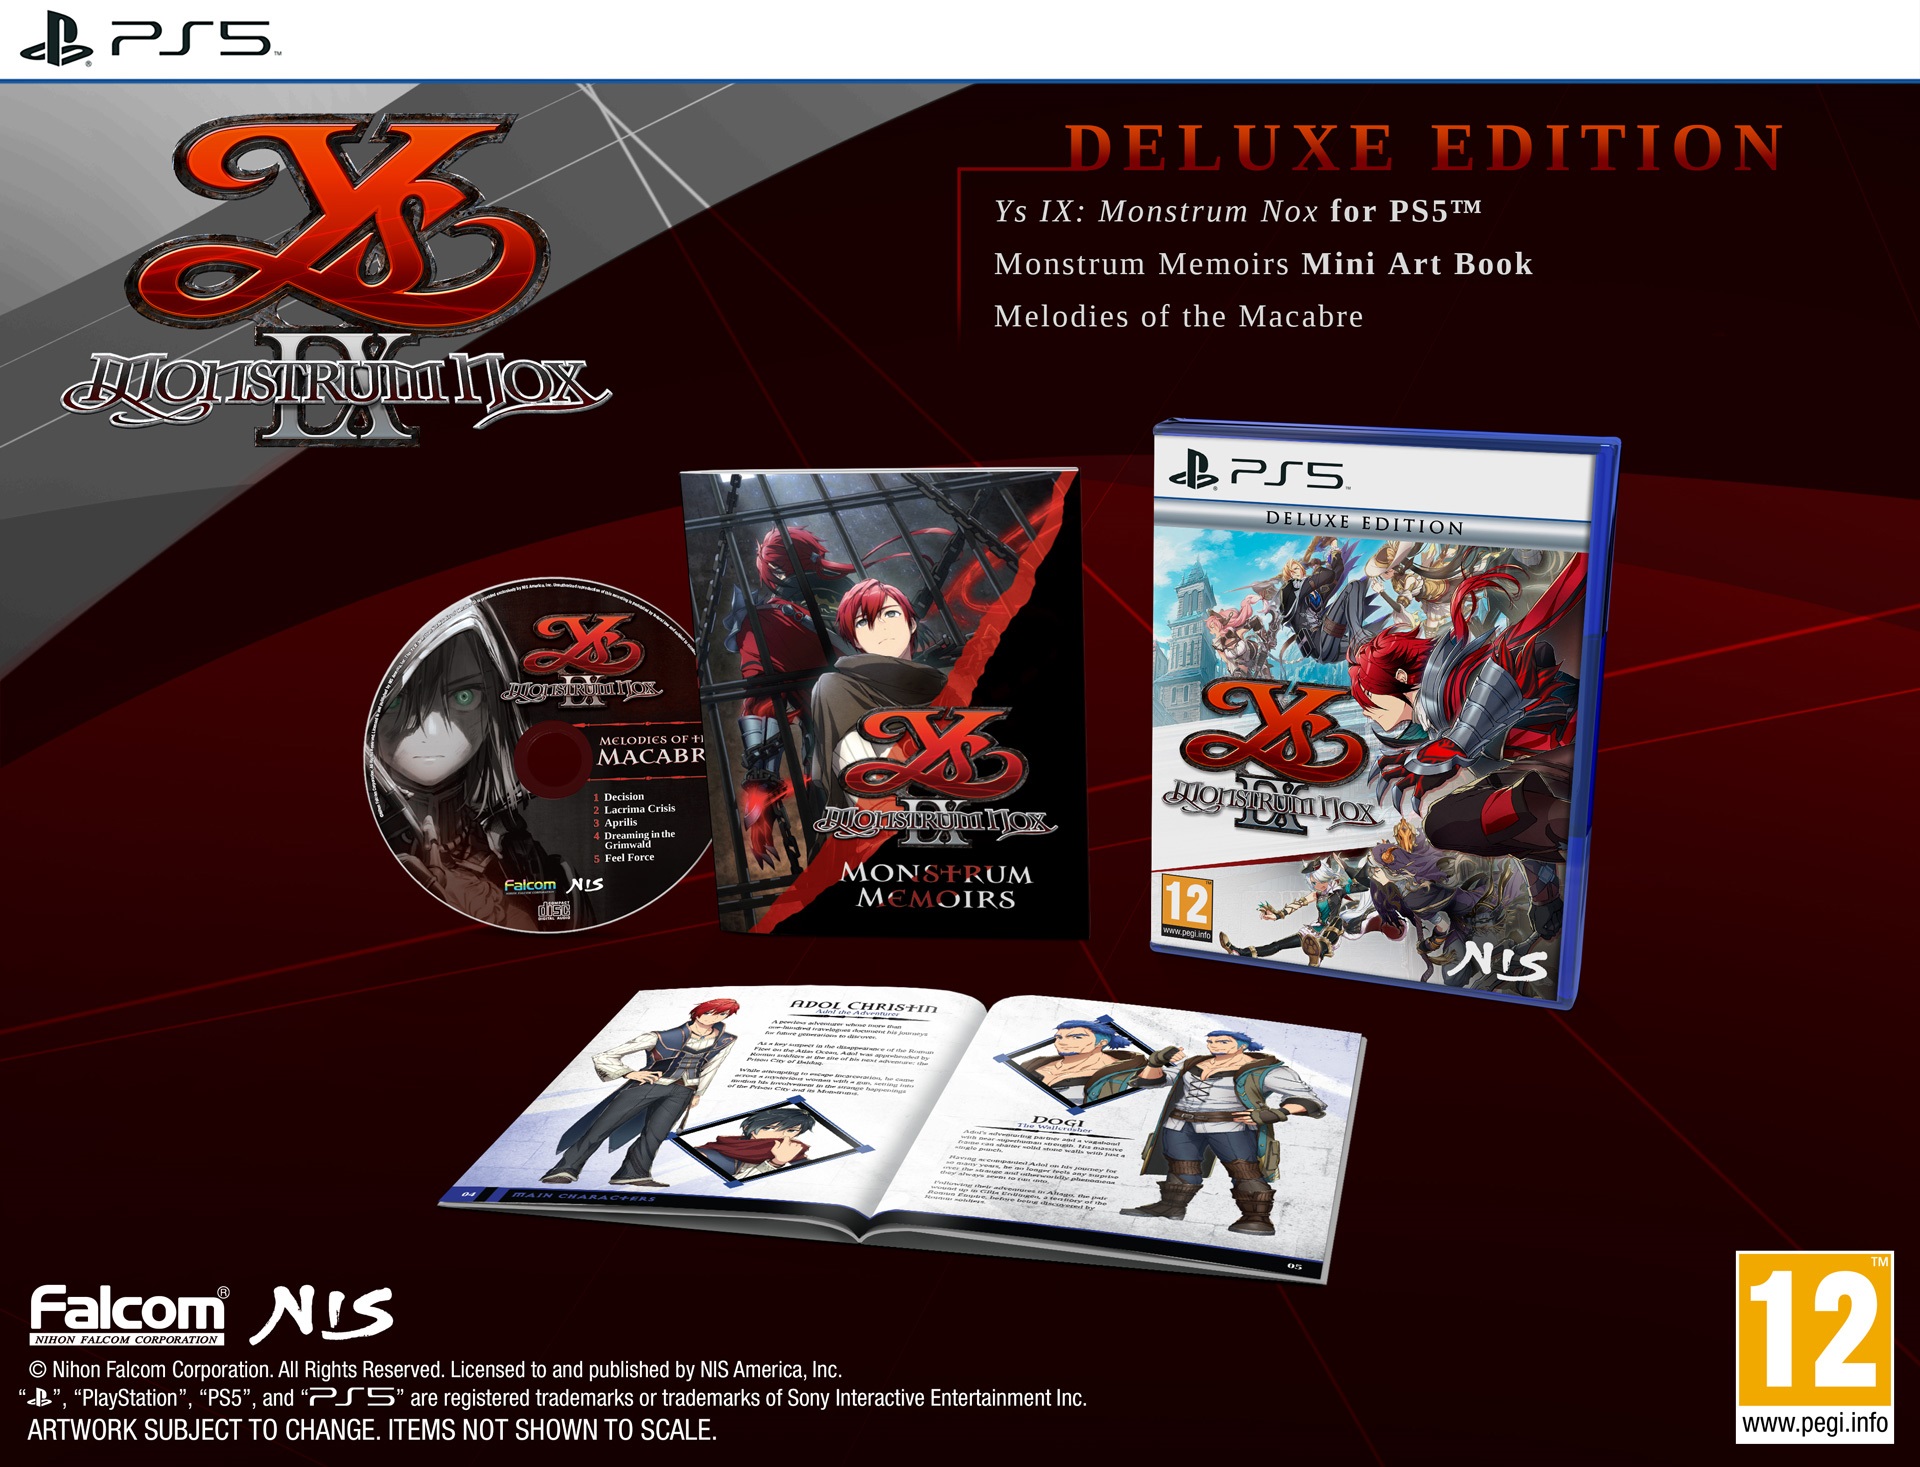 Ys IX: Monstrum Nox - Deluxe Edition (PS5)